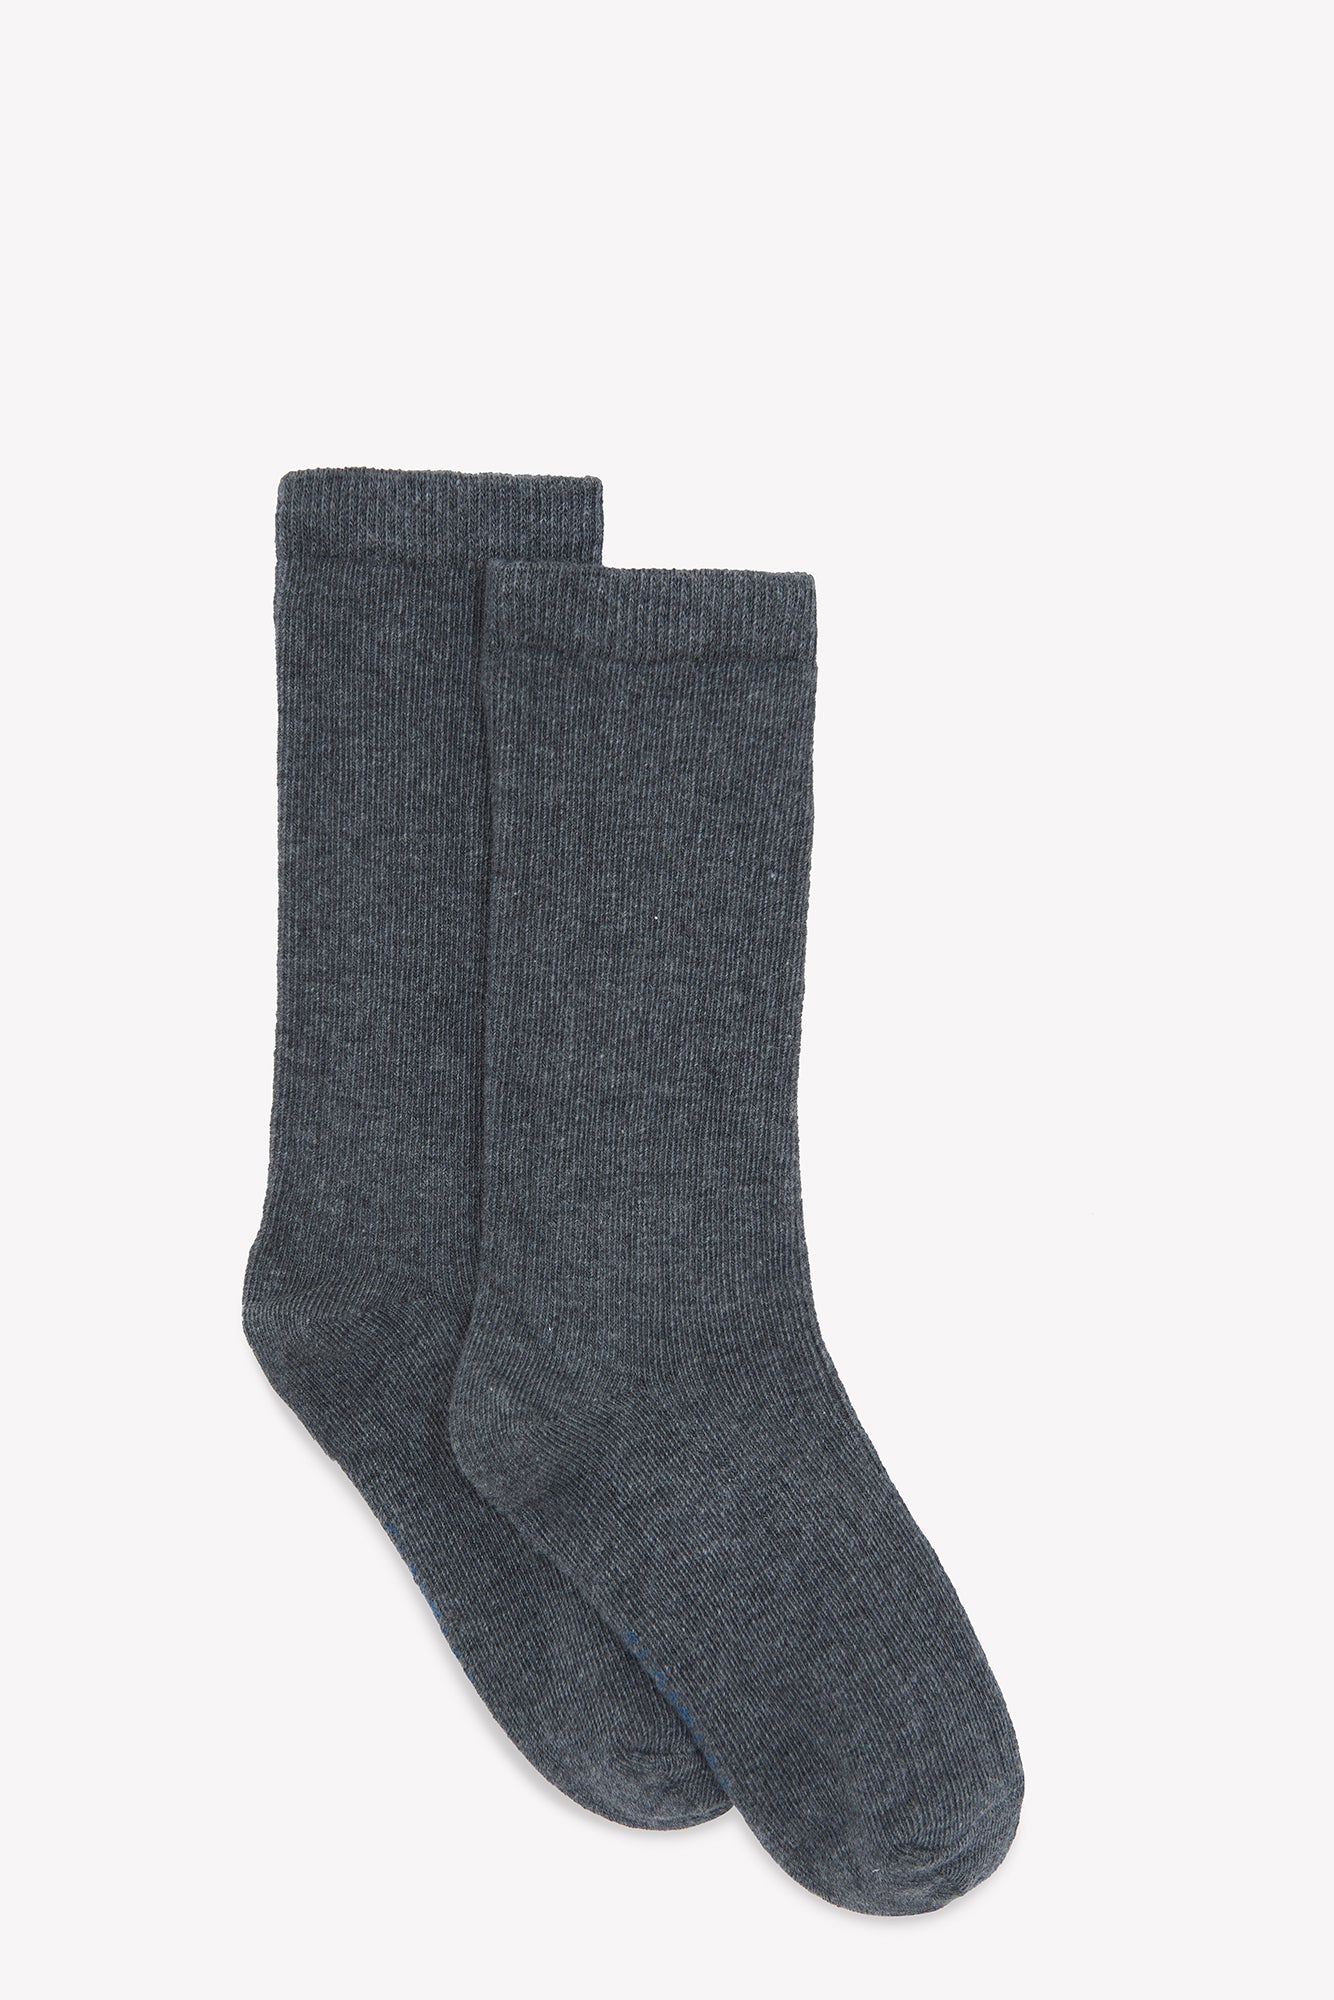 2x2 gray rating sock